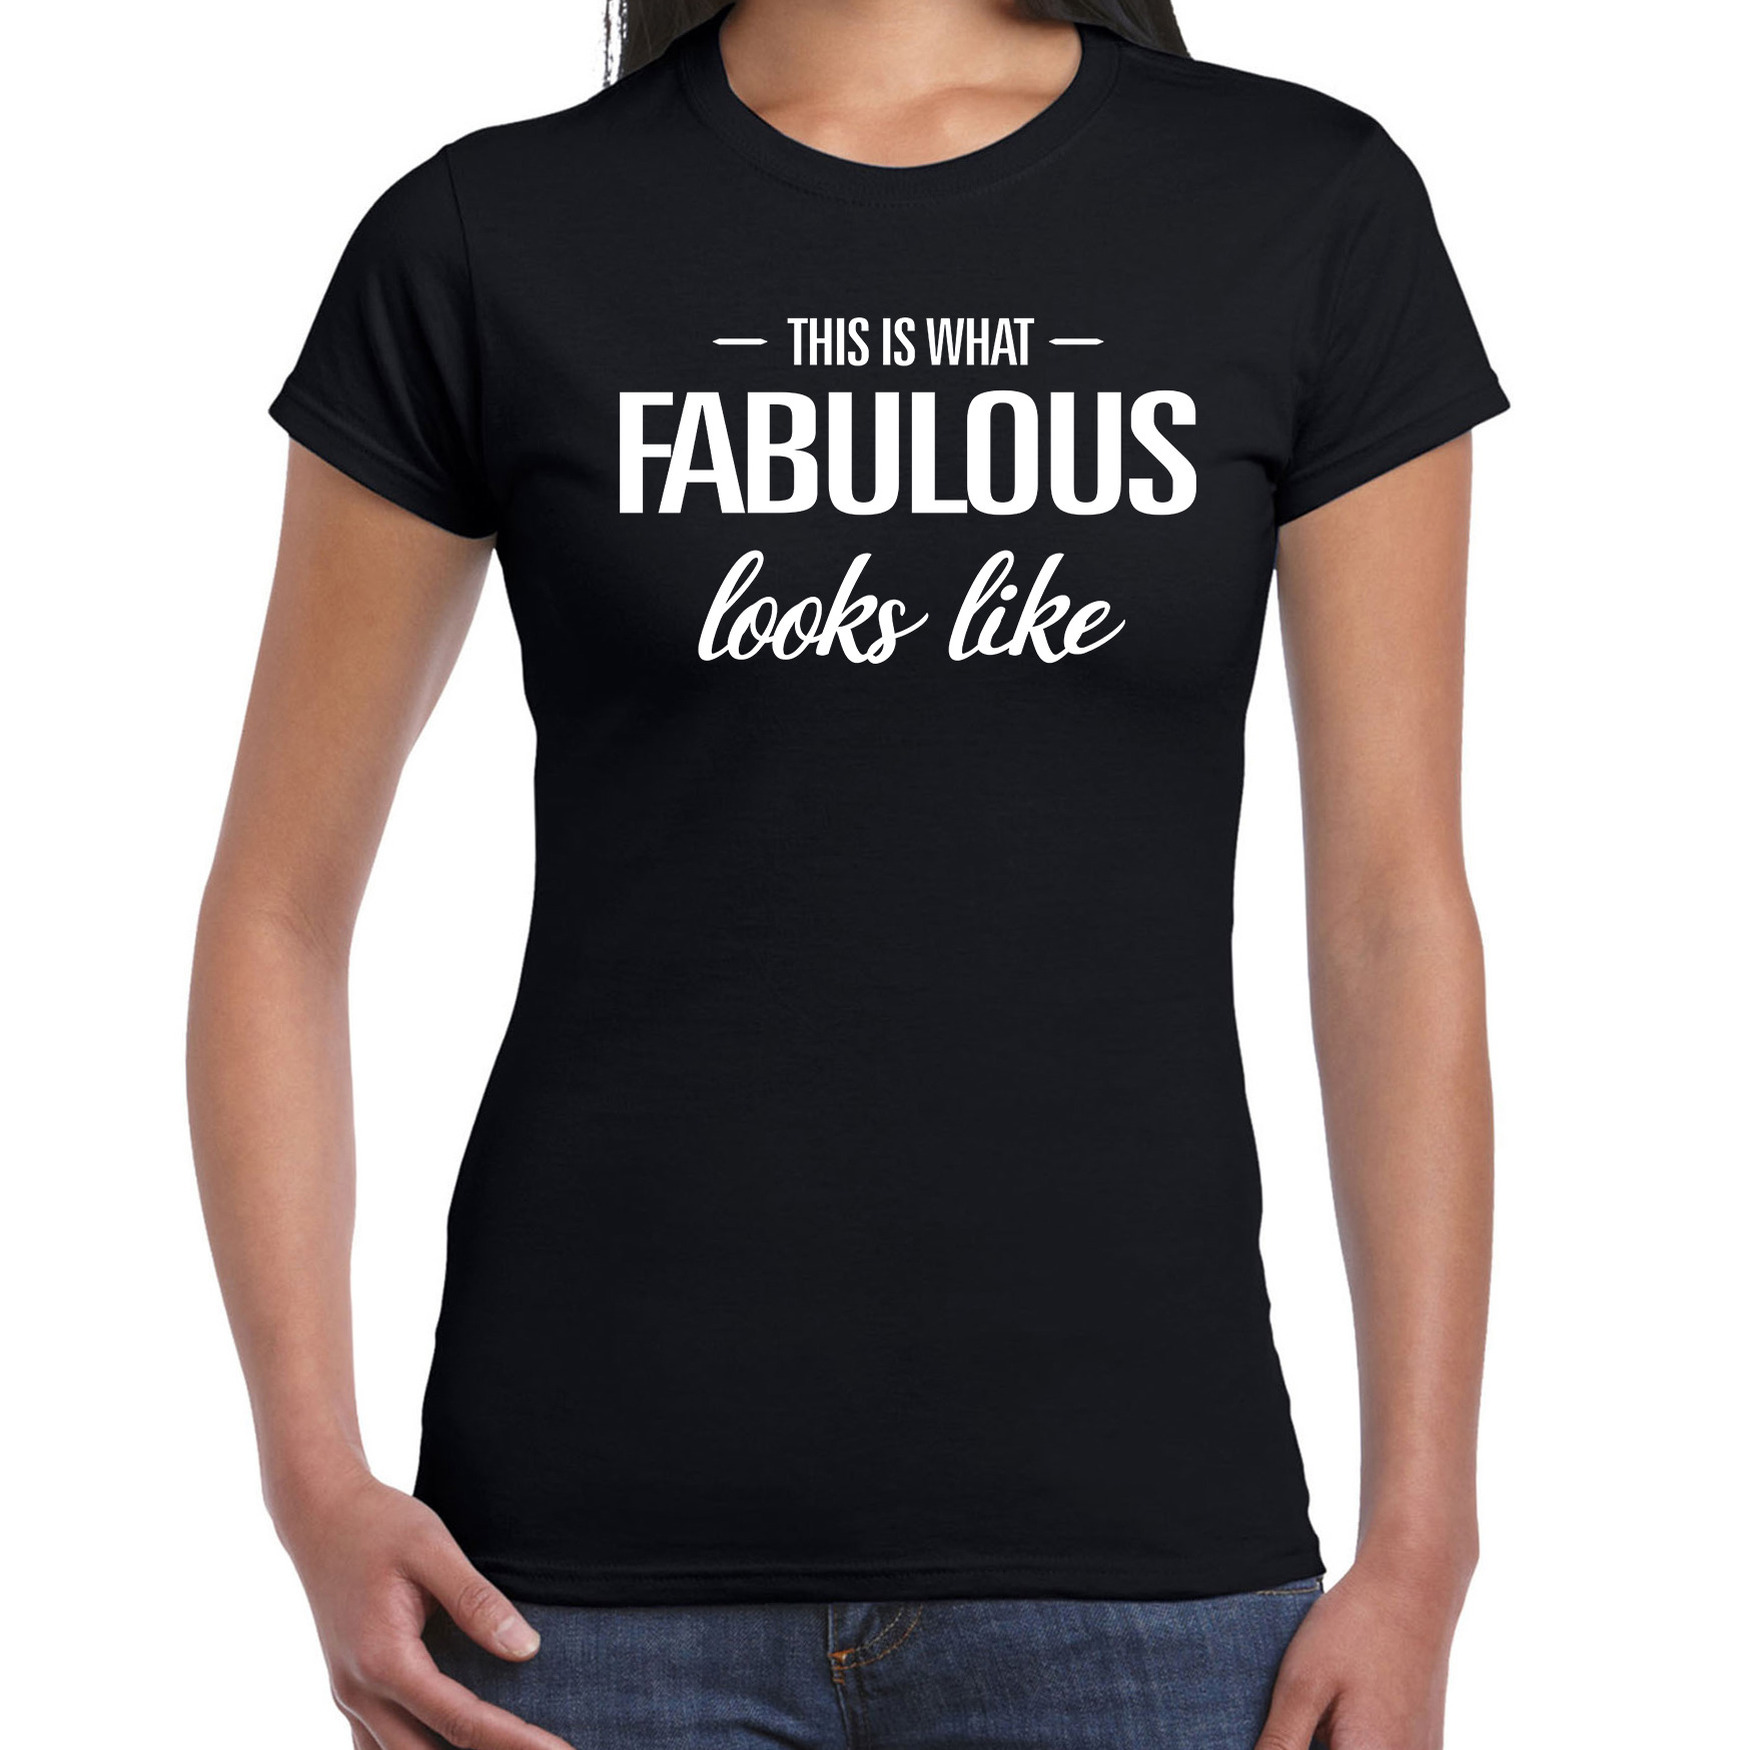 This is what Fabulous looks like t shirt zwart dames fun fout tekst shirt voor fantastische dames vrouwen